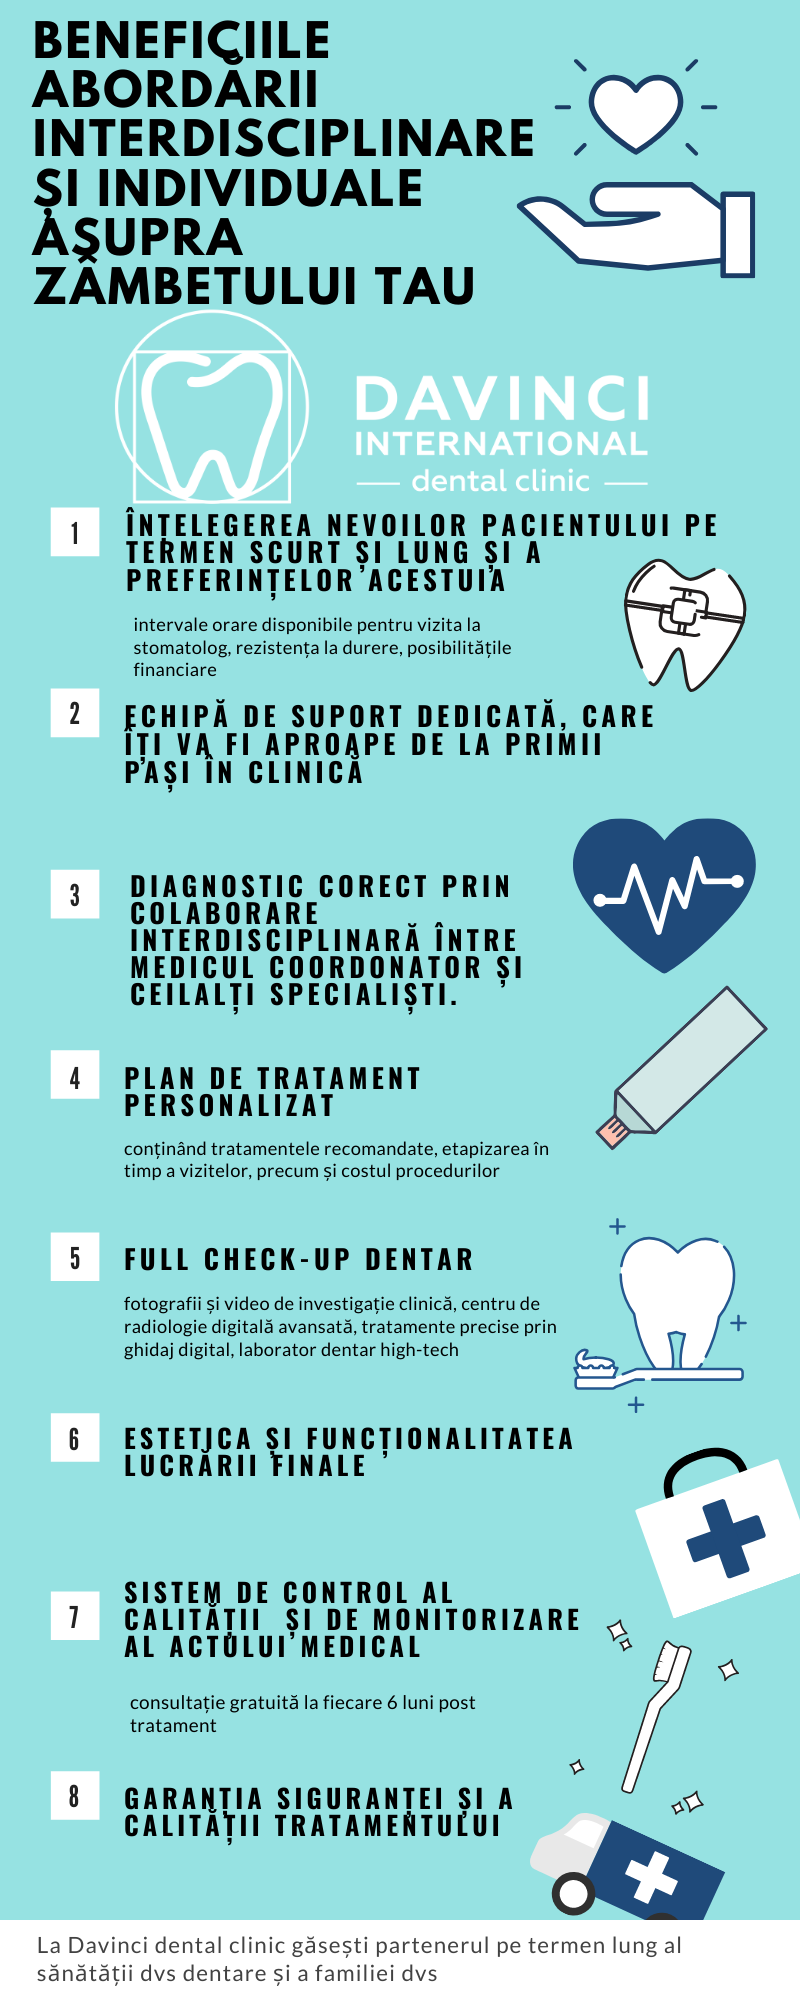 Beneficiile abordarii interdisciplinare davinci dental clinic